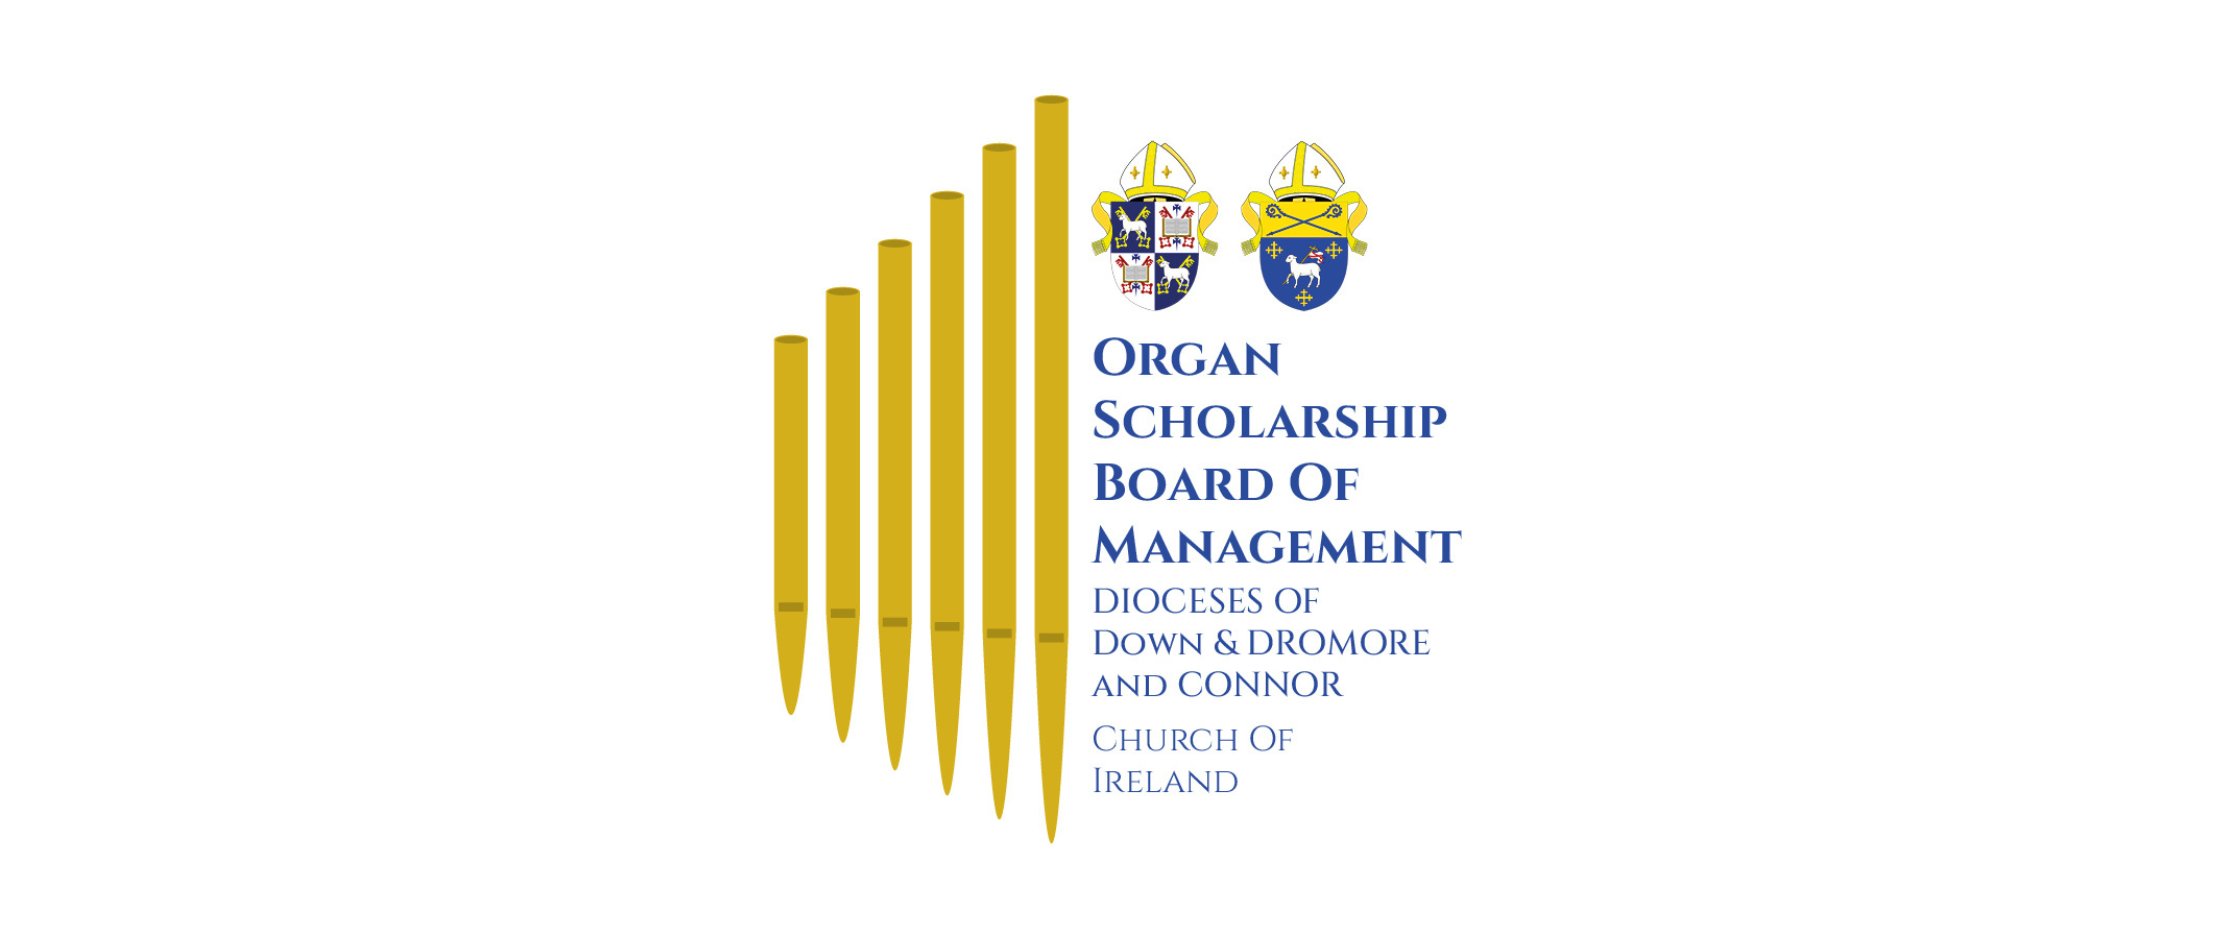 Organ Scholarship call for applications